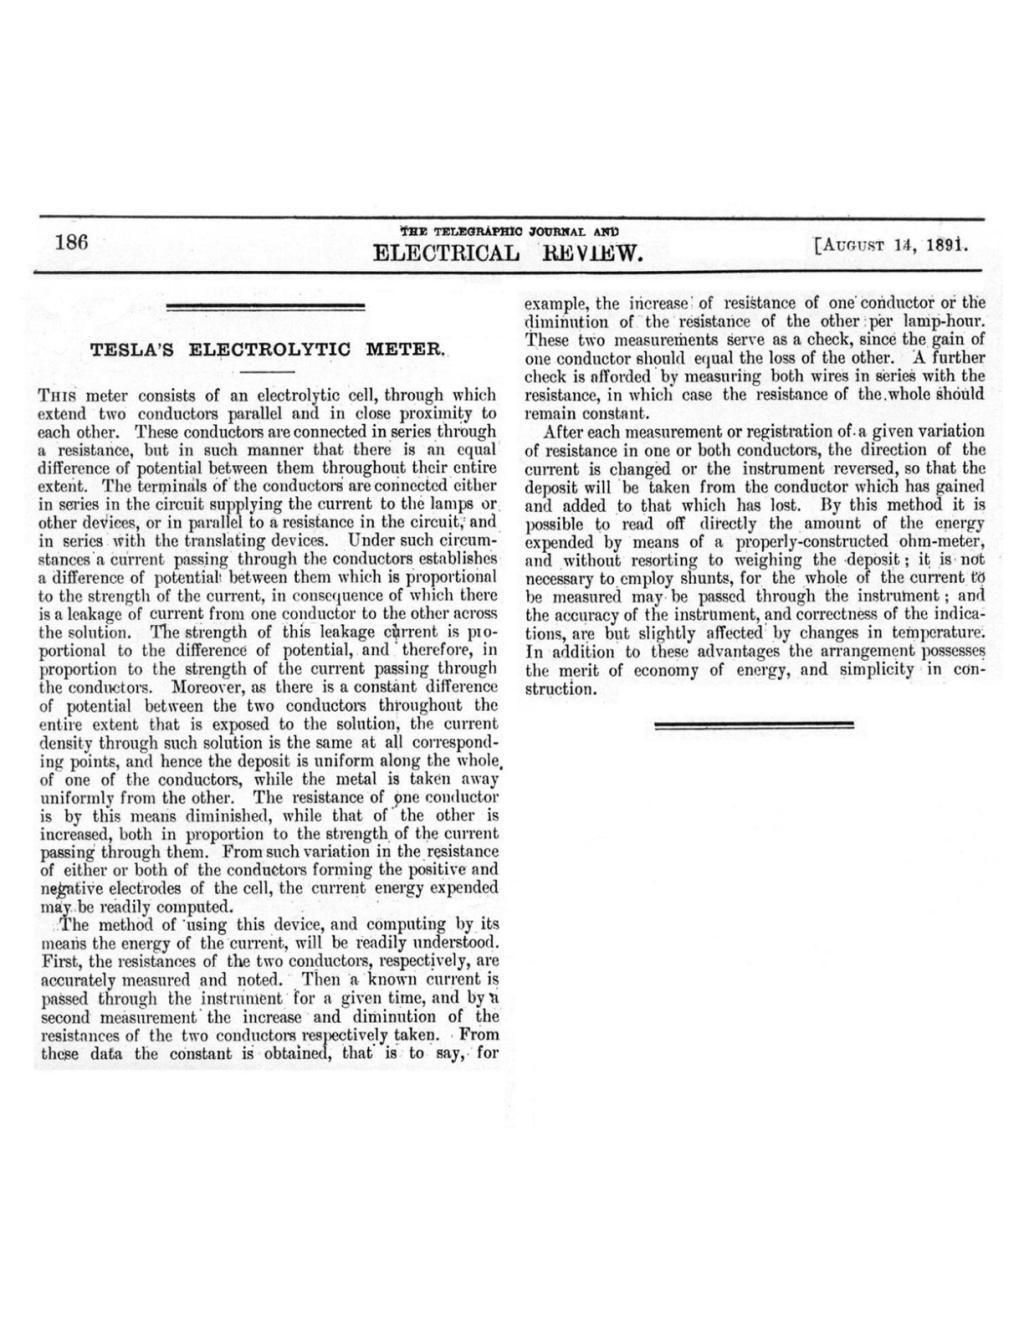 Preview of Nikola Tesla’s Electrolytic Meter article